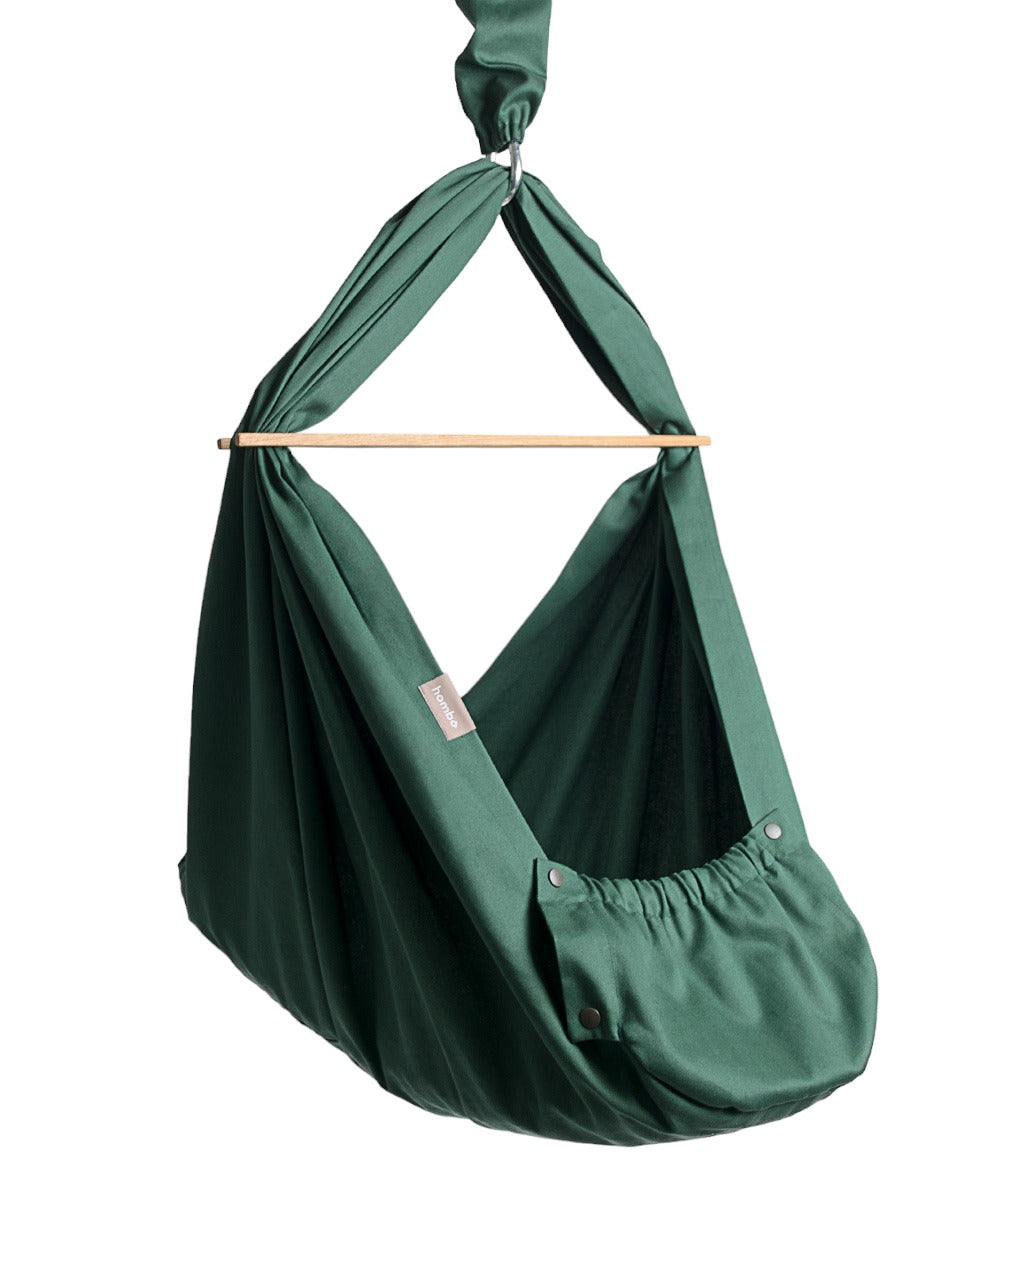 homba® baby hanging cradle cotton green